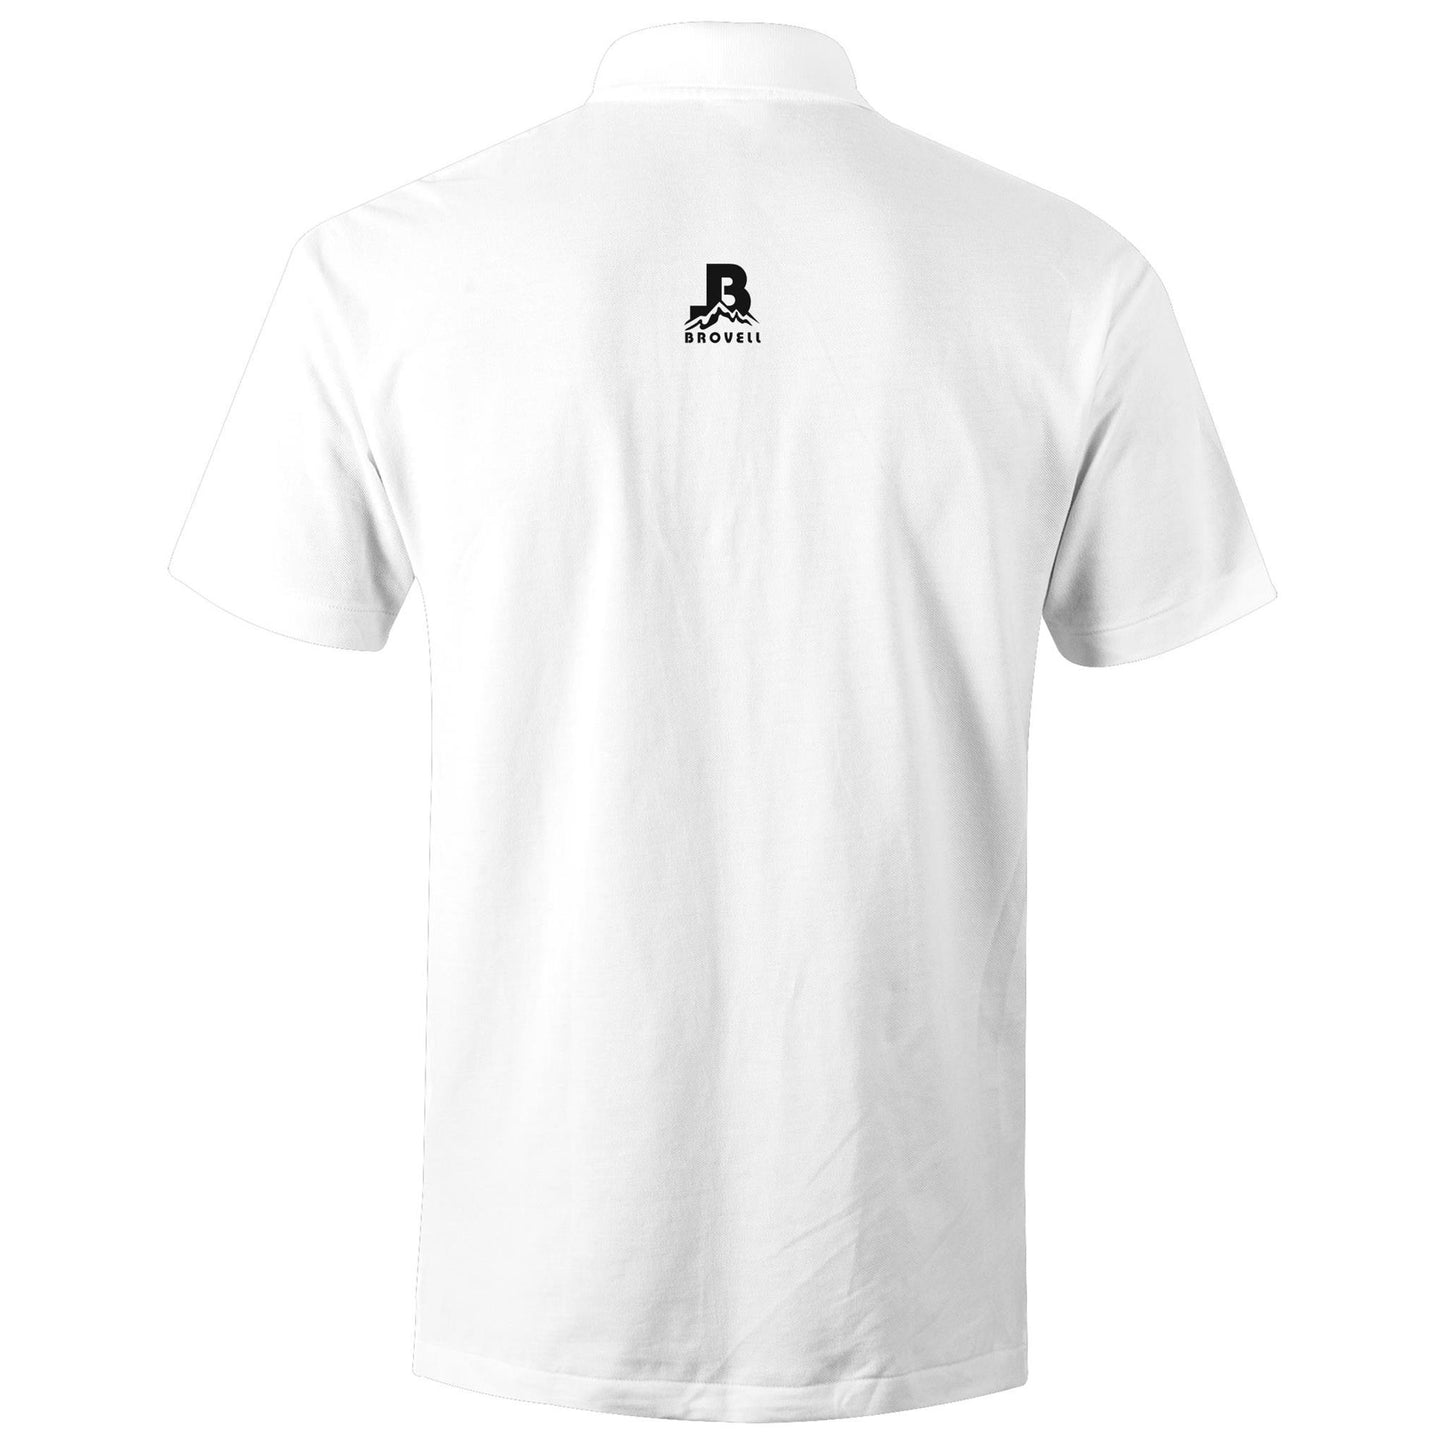 AS Colour Chad - Brovell S/S Polo Shirt - Back Logo